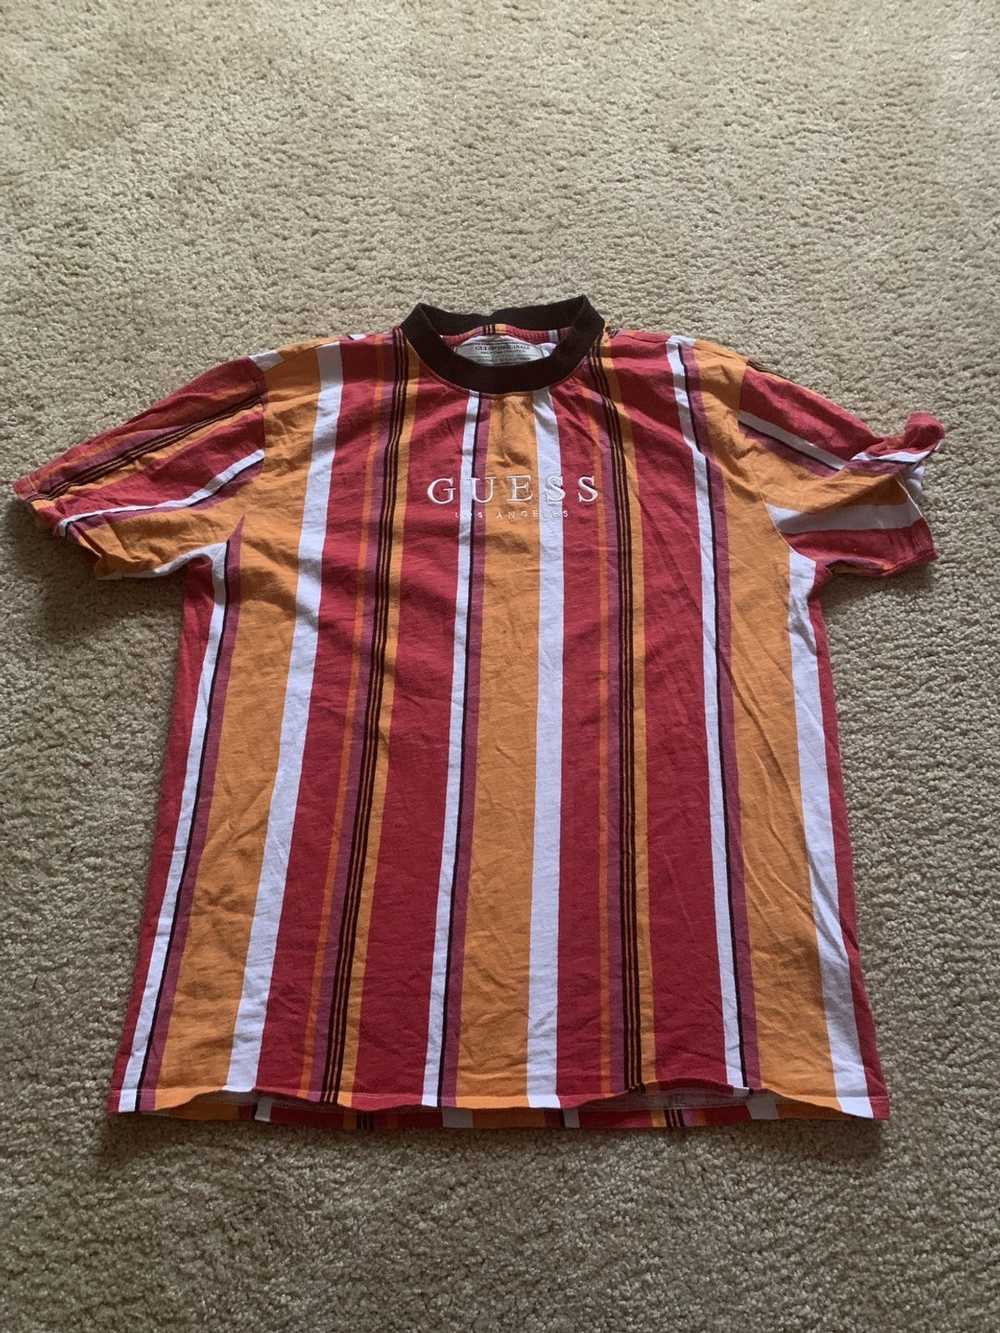 Guess GUESS striped t shirt - image 1